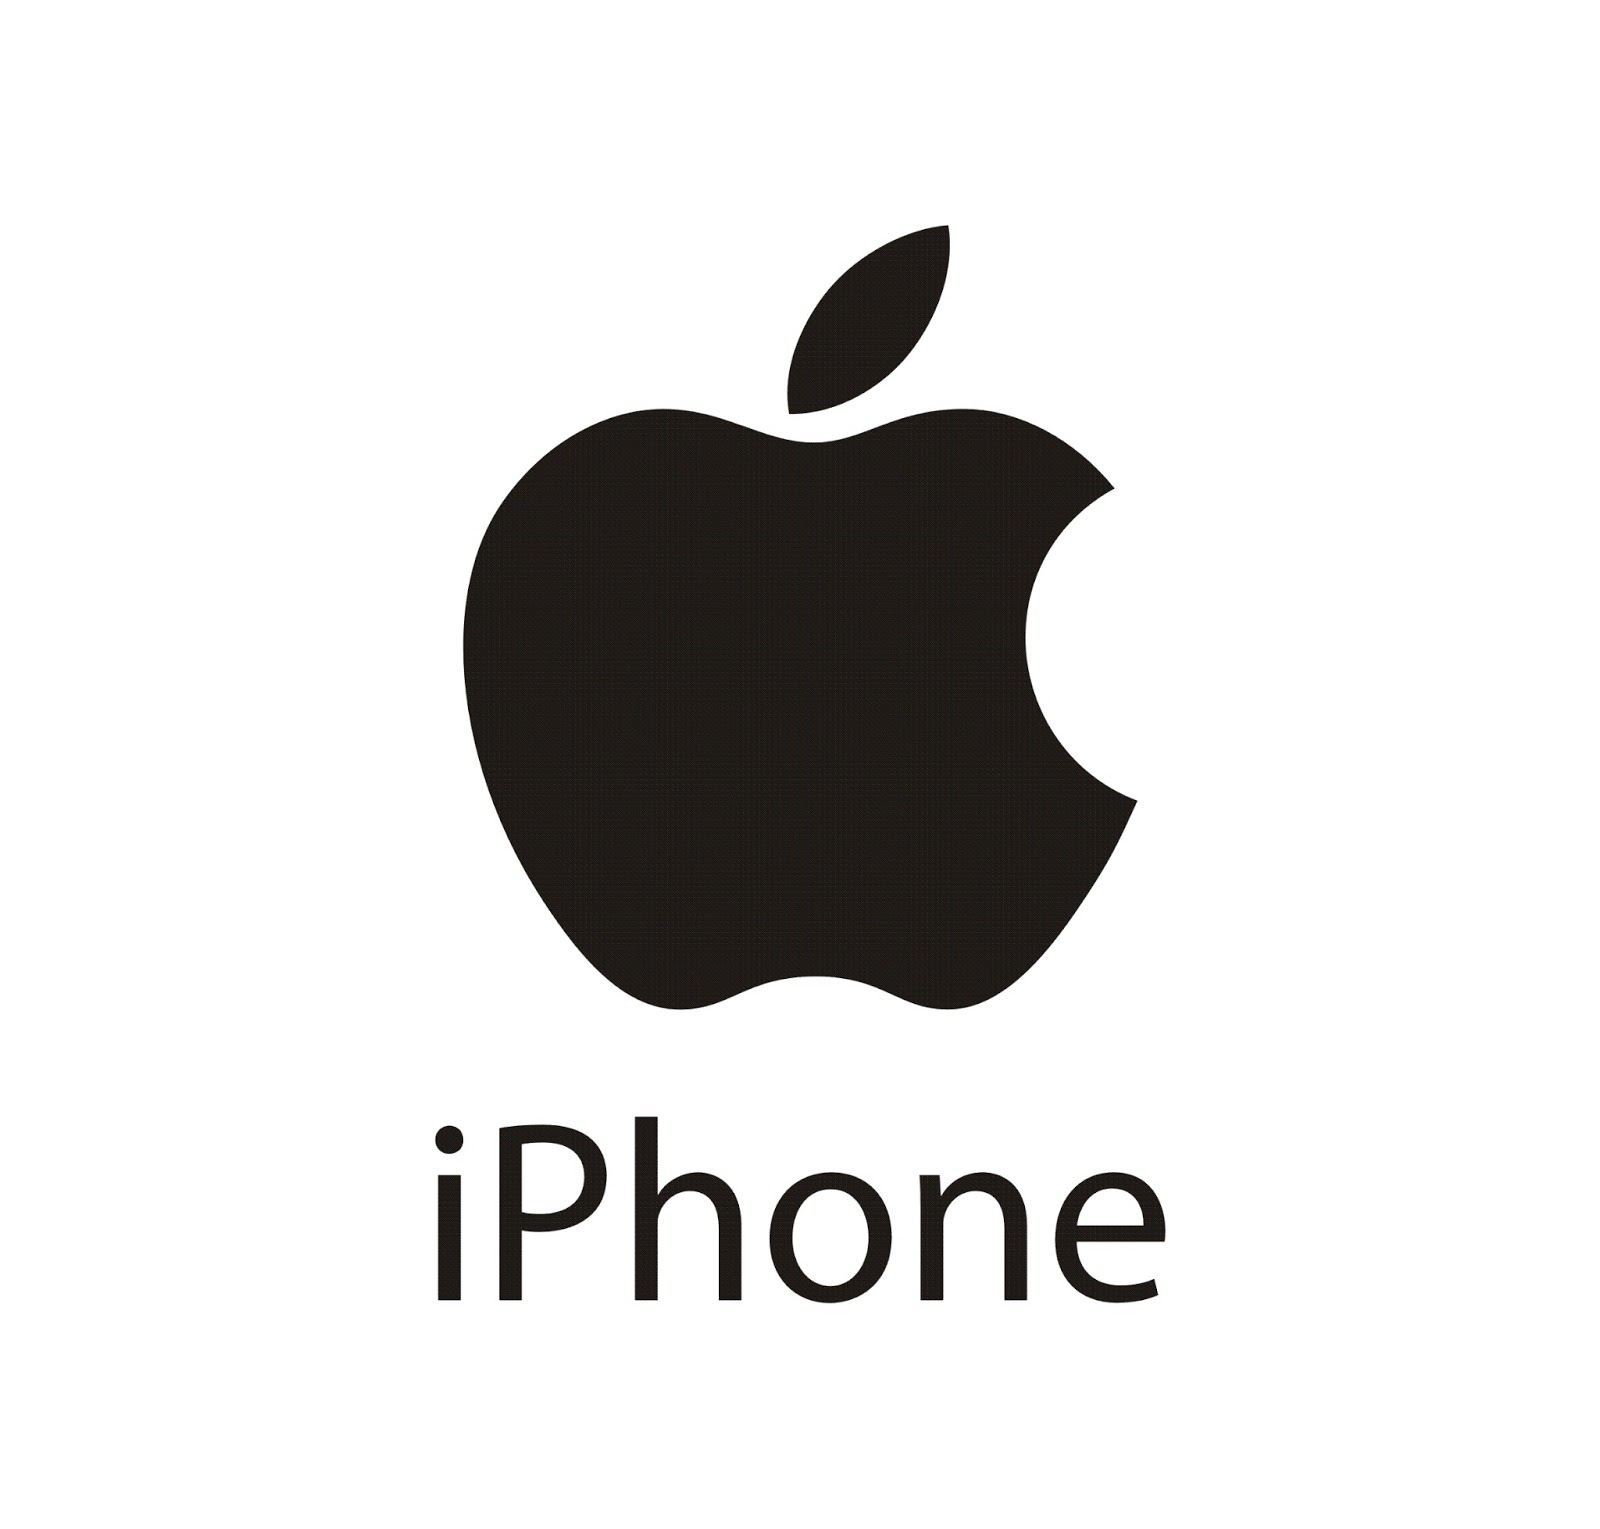  Logo  iPhone  file Vector Ti file  ha mi n ph 